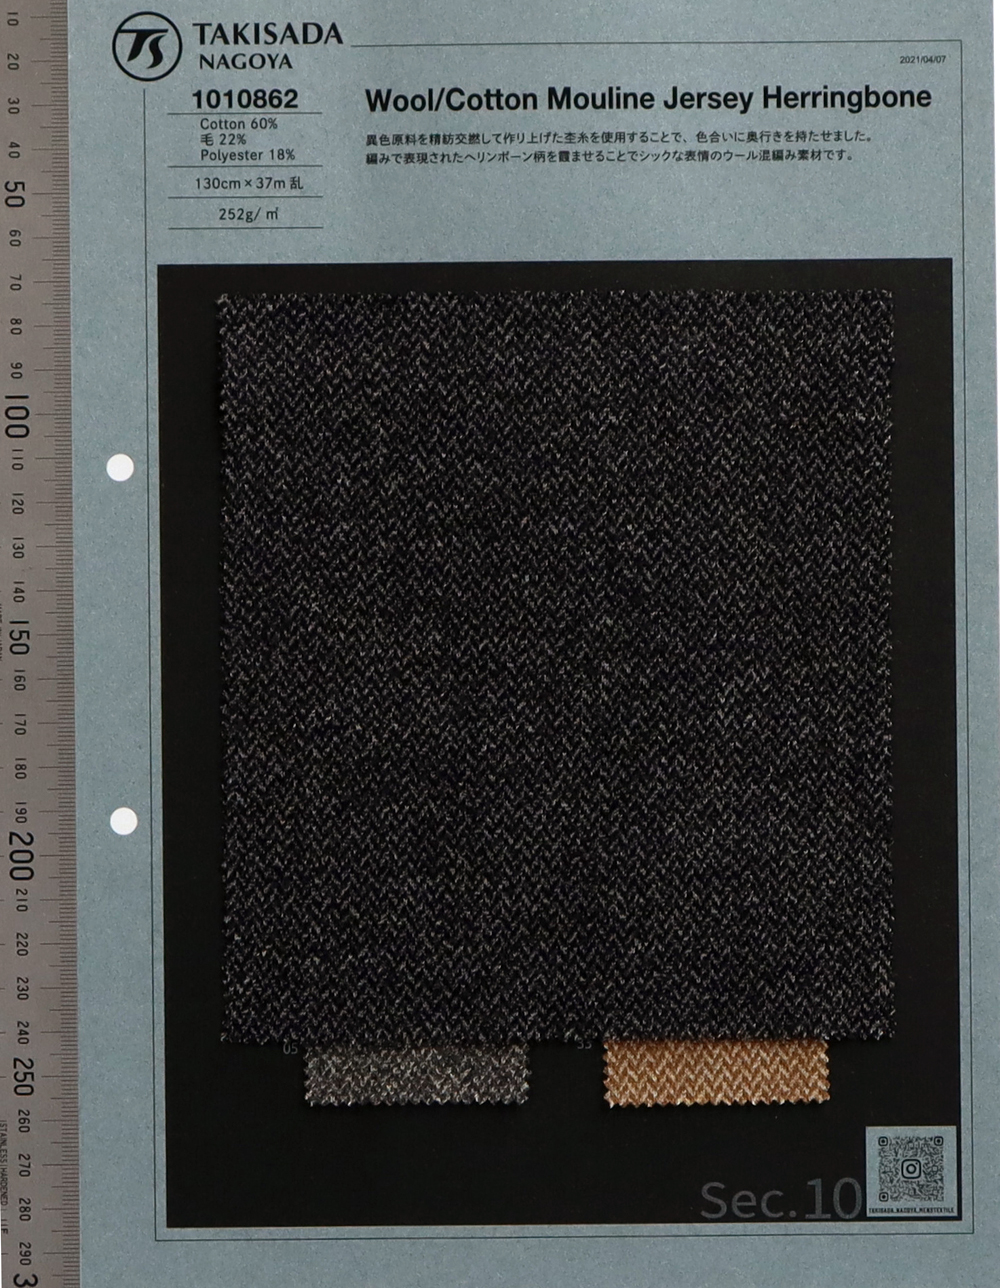 1010862 Lana / Algodón Murine Jersey Herringbone[Fabrica Textil] Takisada Nagoya